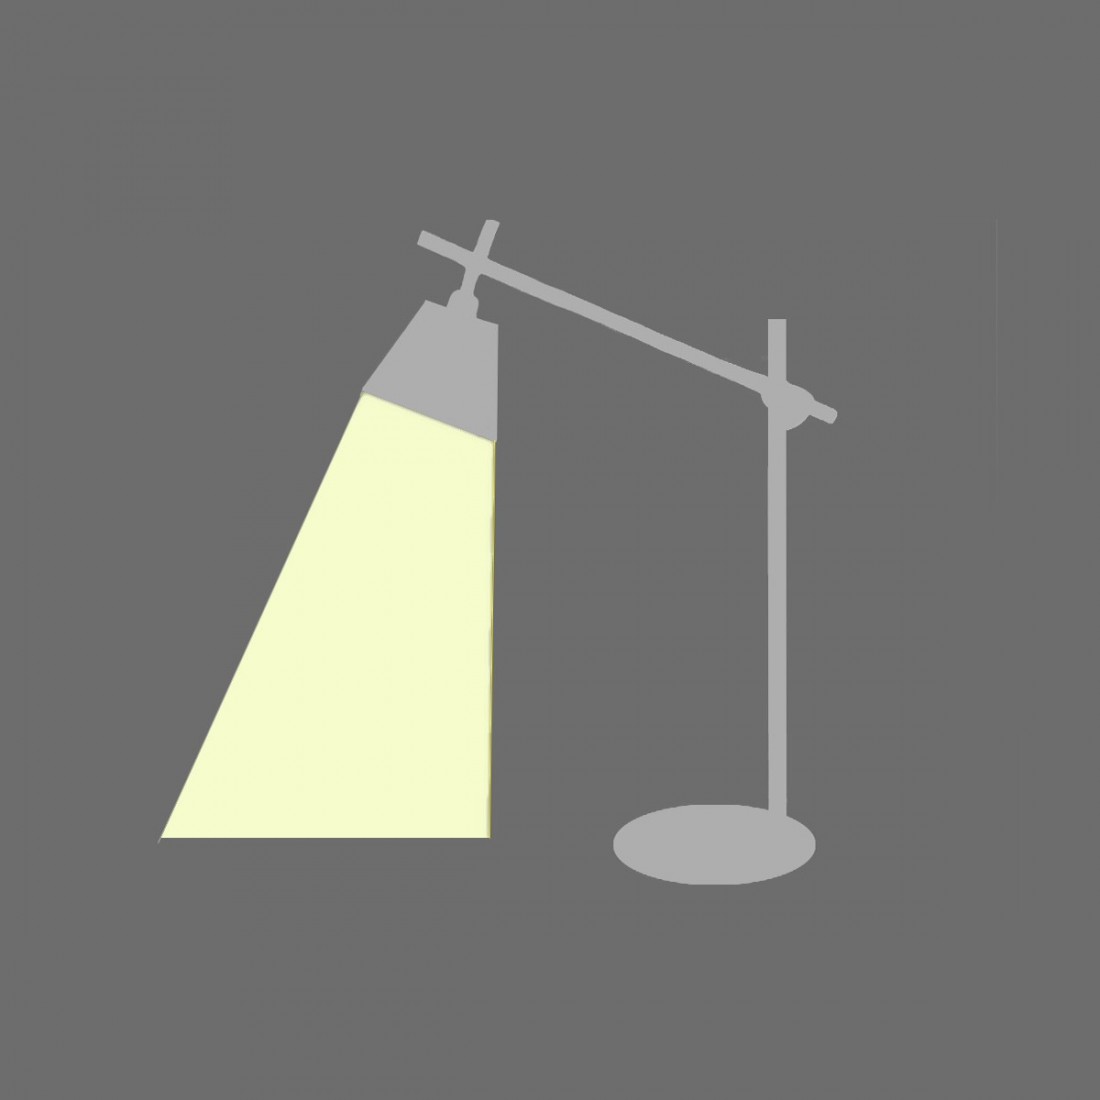 Lampe de bureau led moderne LOLA Illuminando réglable